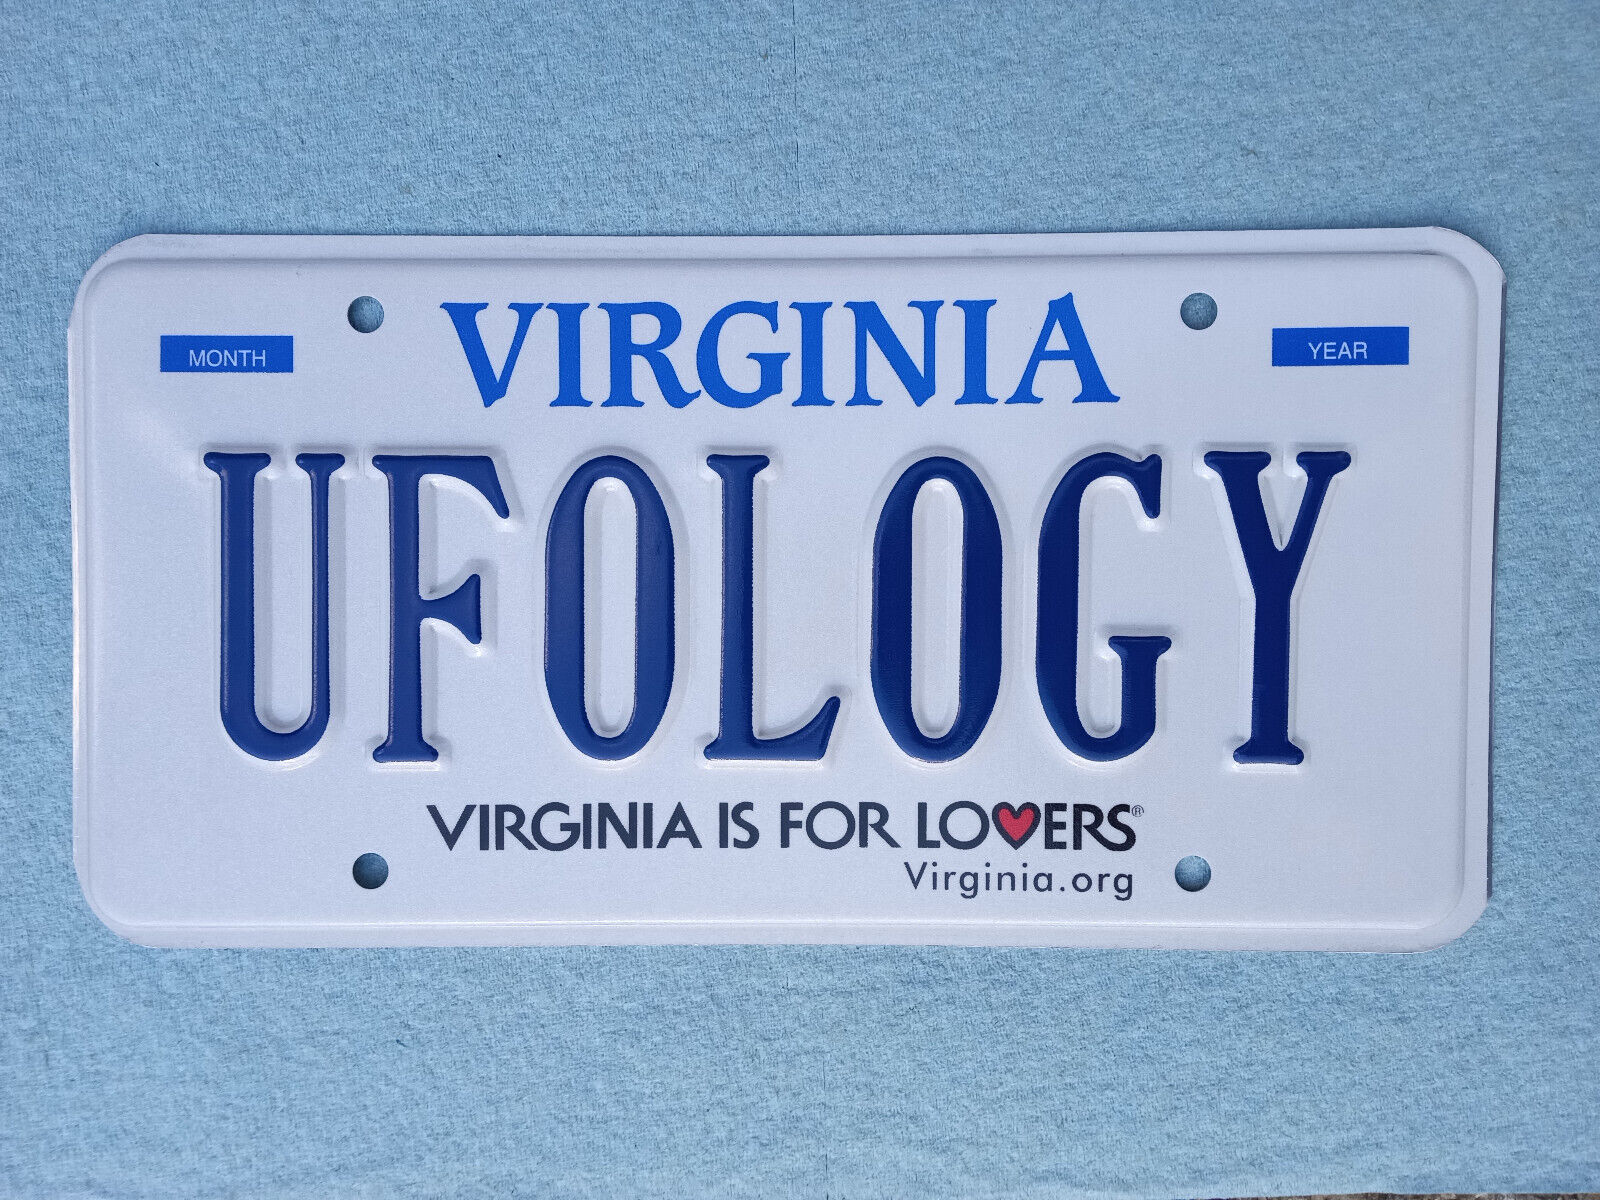 UFOLOGY Virginia Is For Lovers Expired Virginia Va DMV Issued License Plate